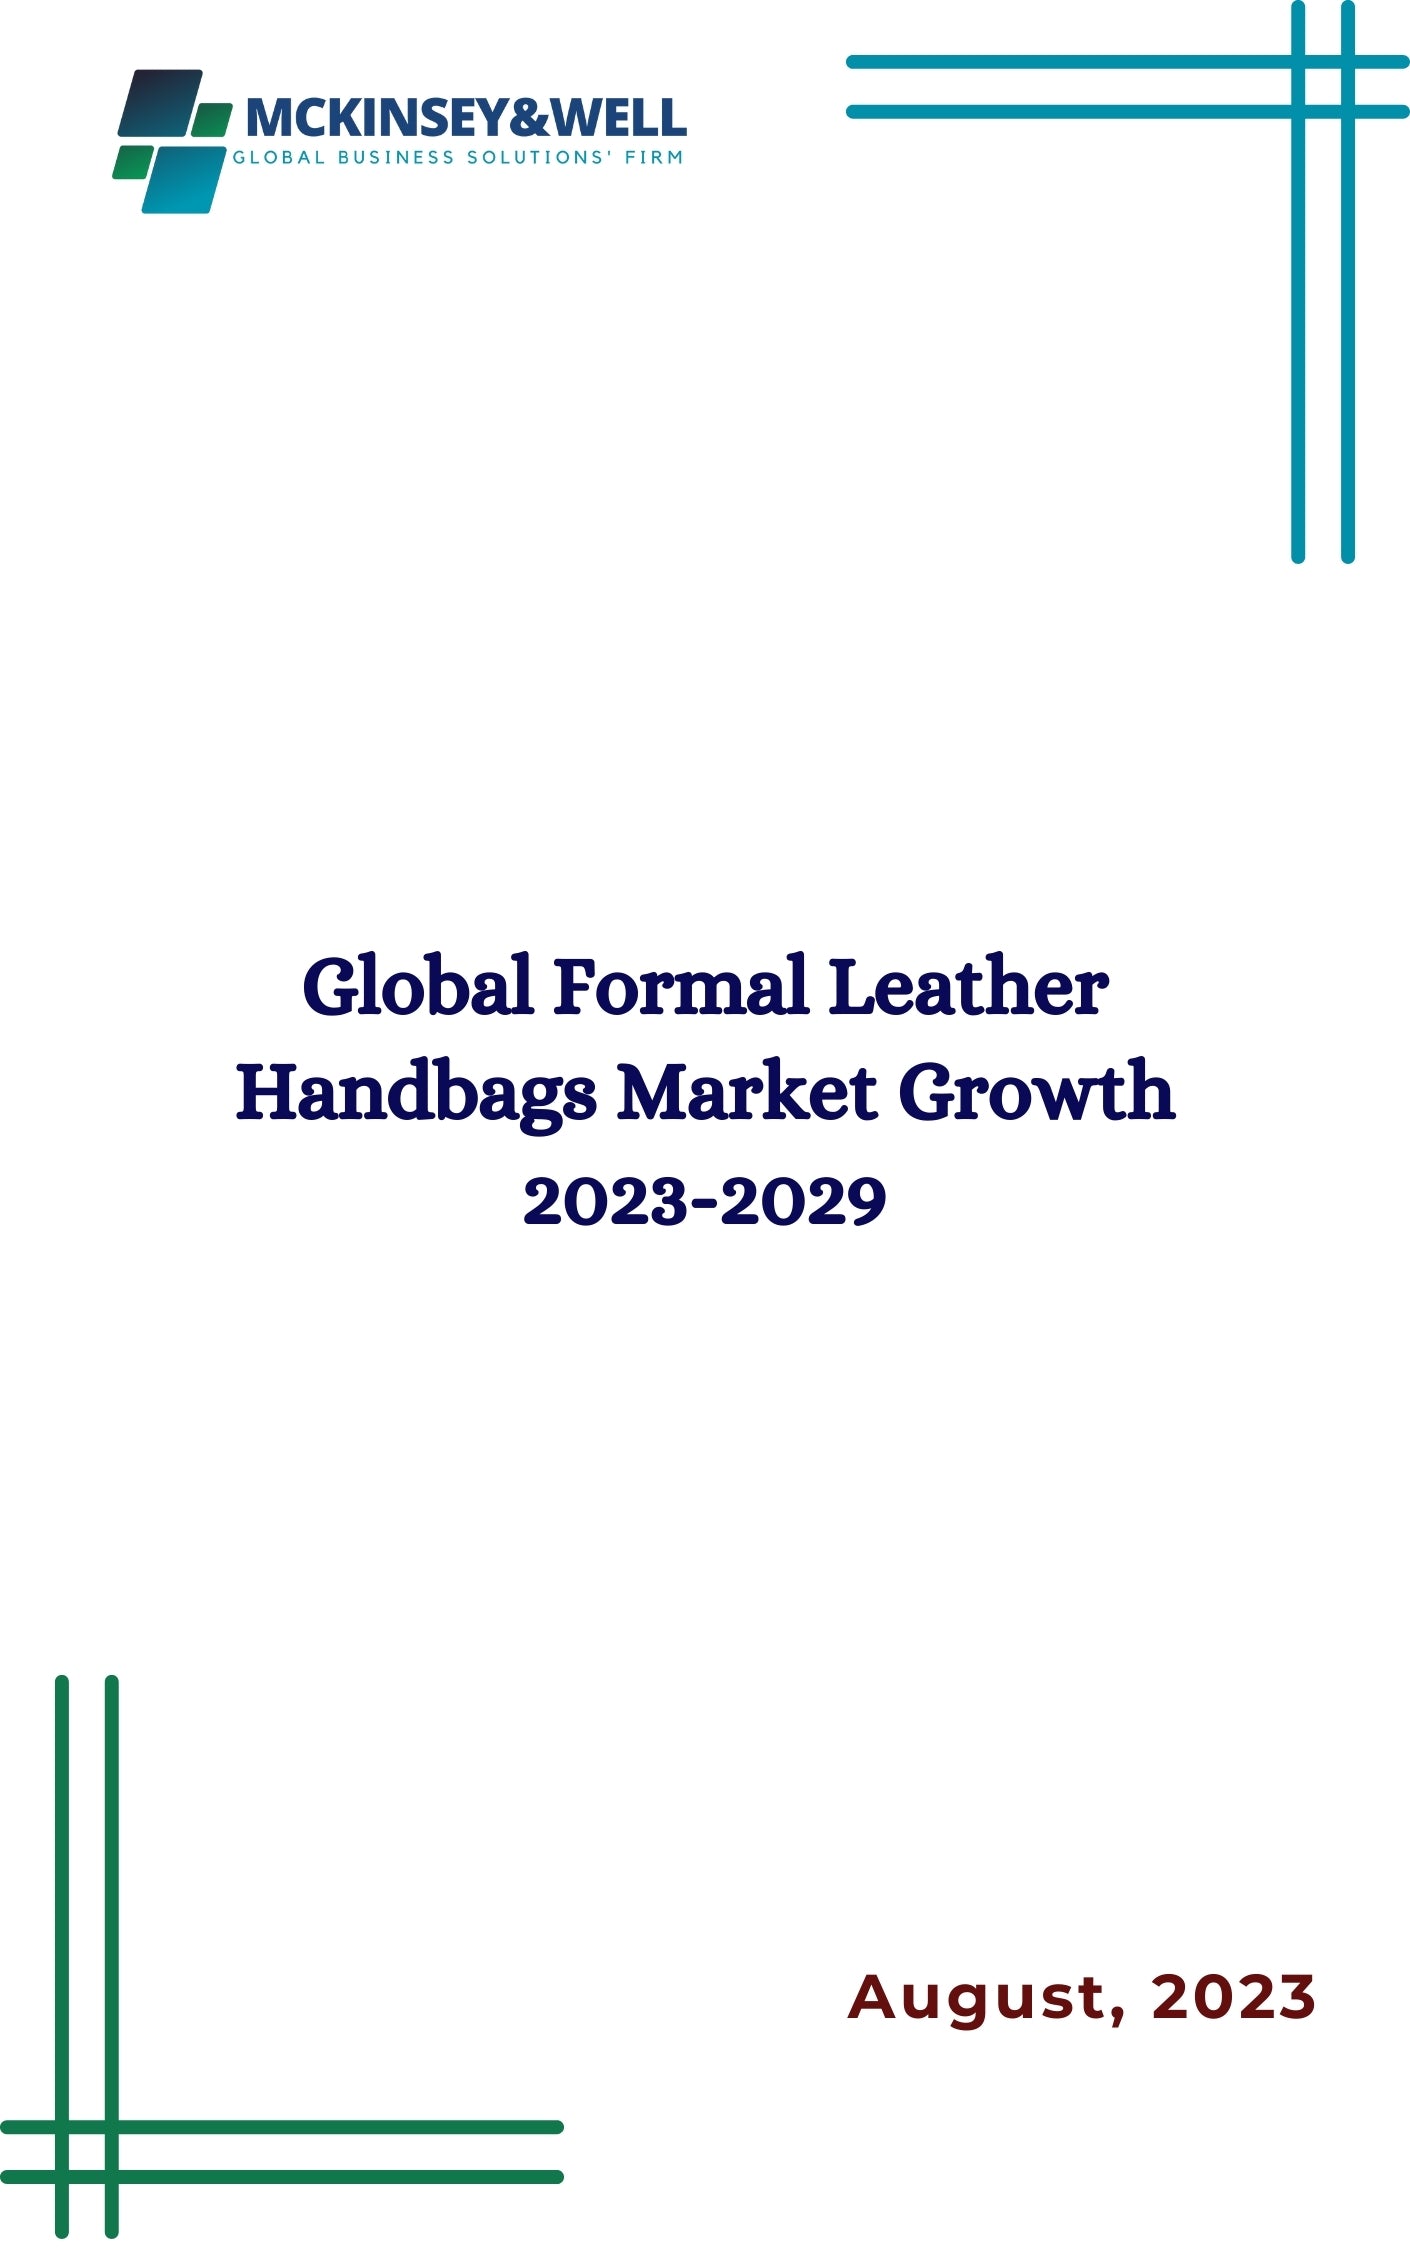 Global Formal Leather Handbags Market Growth 2023-2029